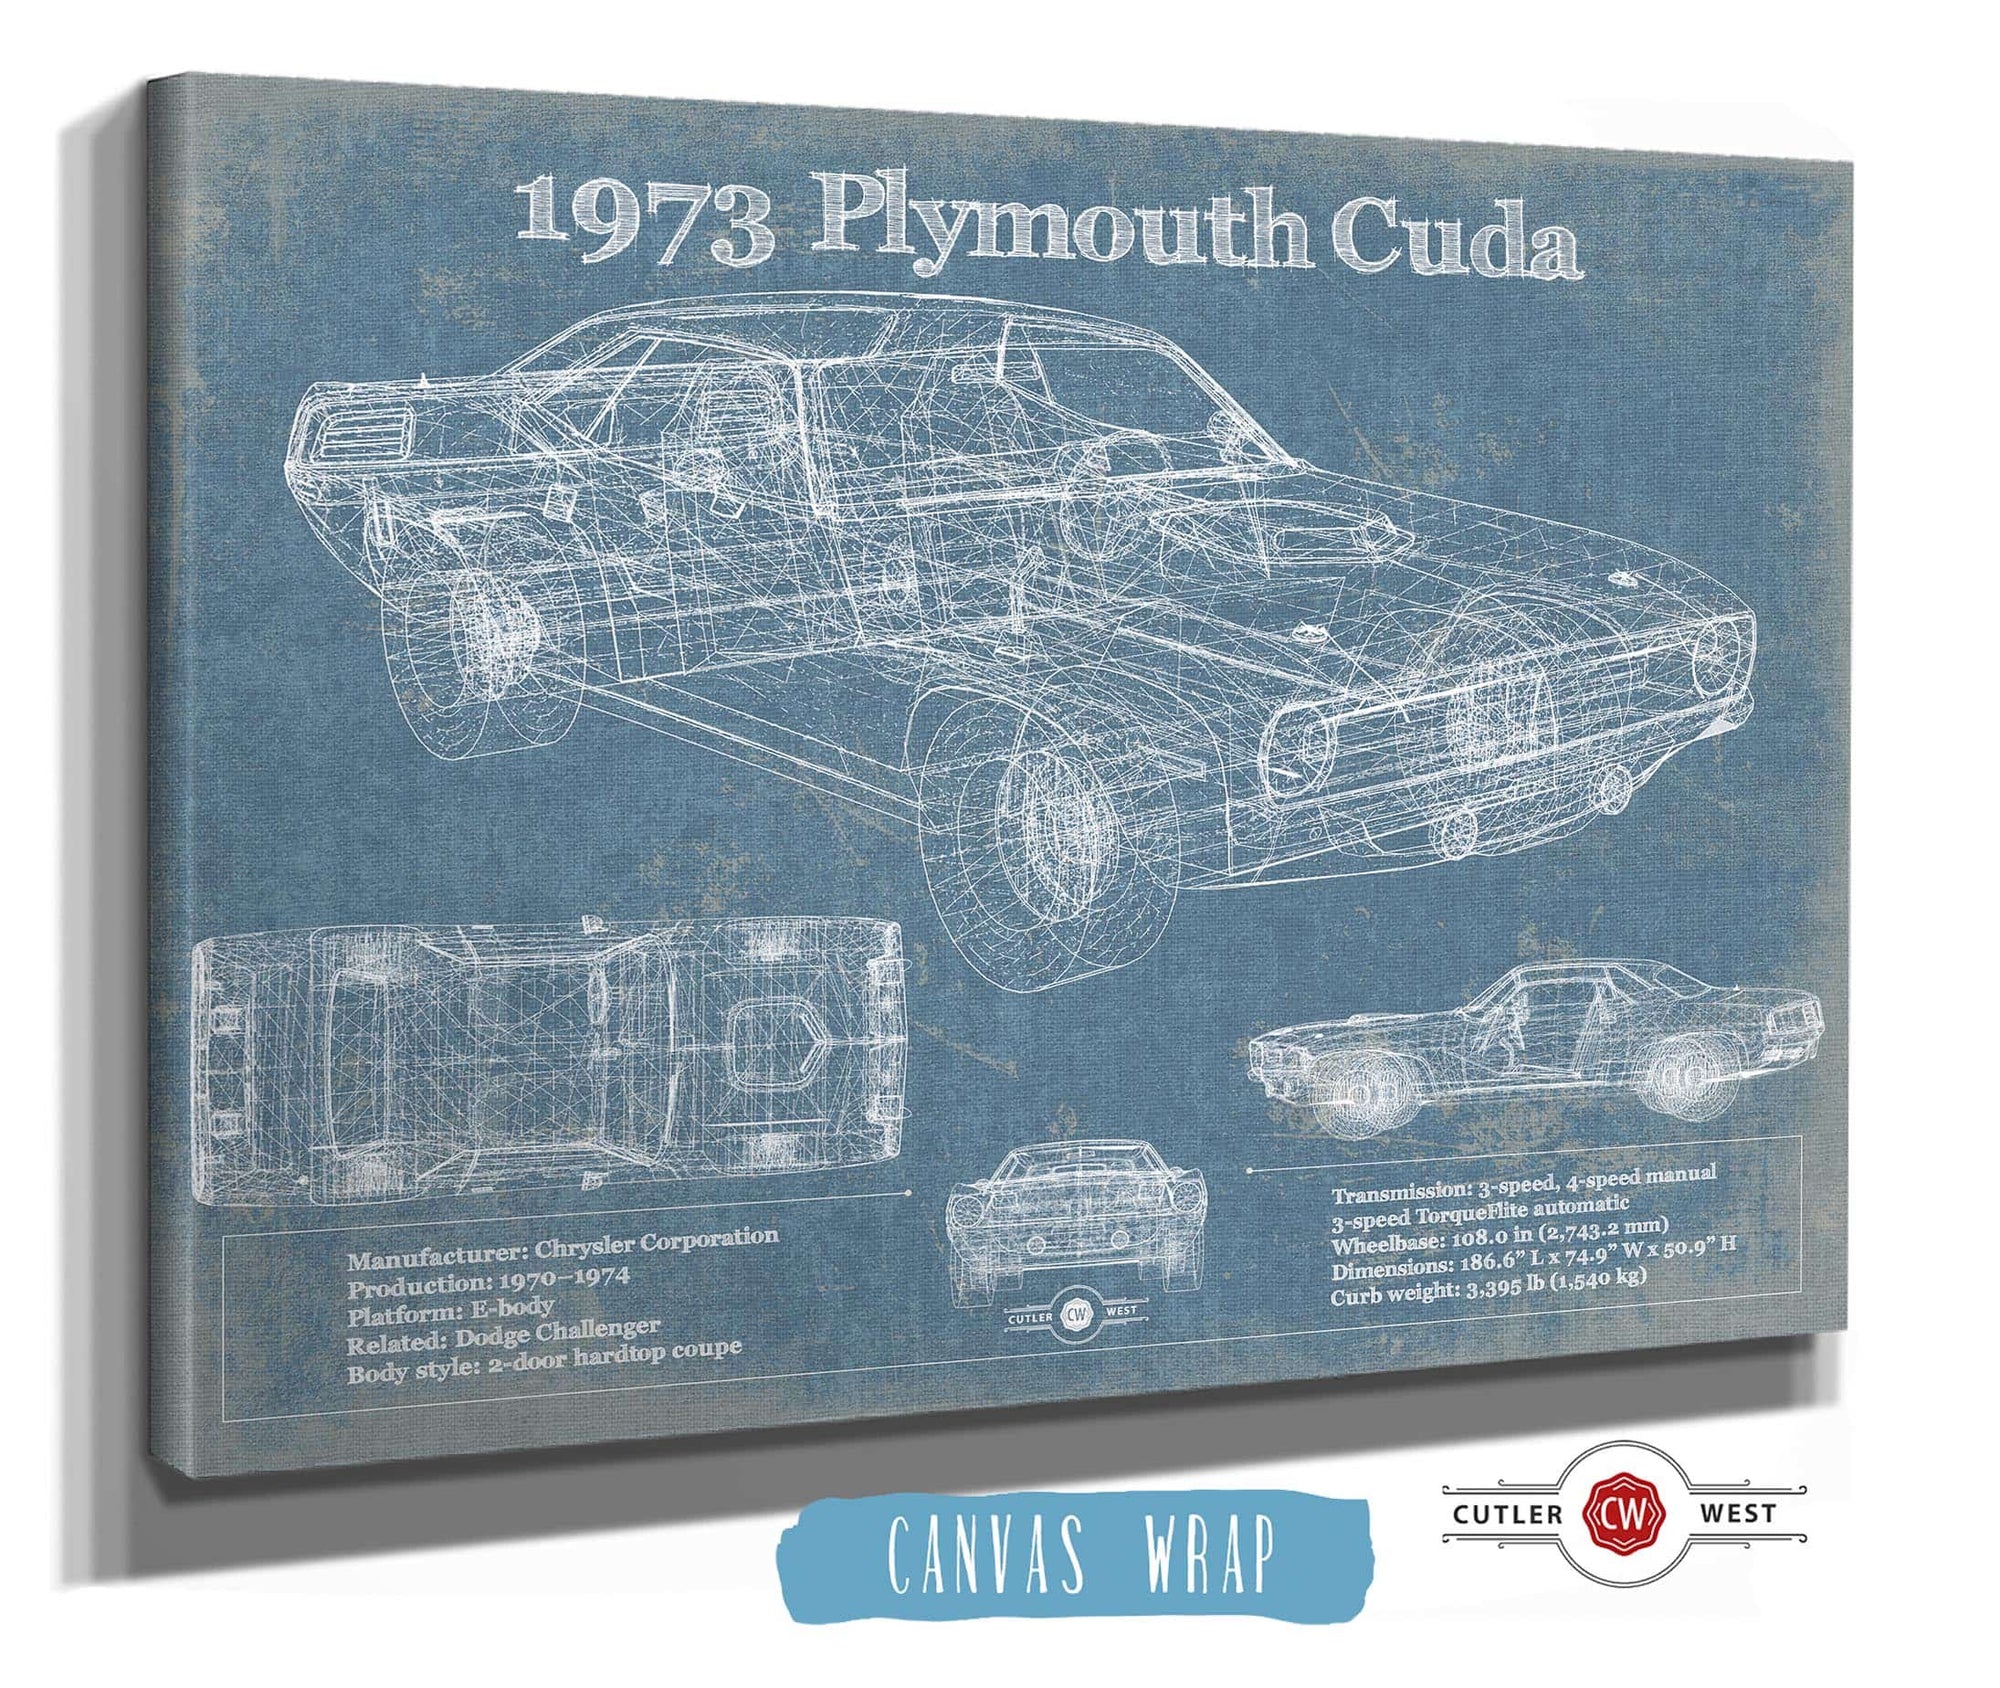 Cutler West 1973 Plymouth Cuda 440 Vintage Blueprint Auto Print